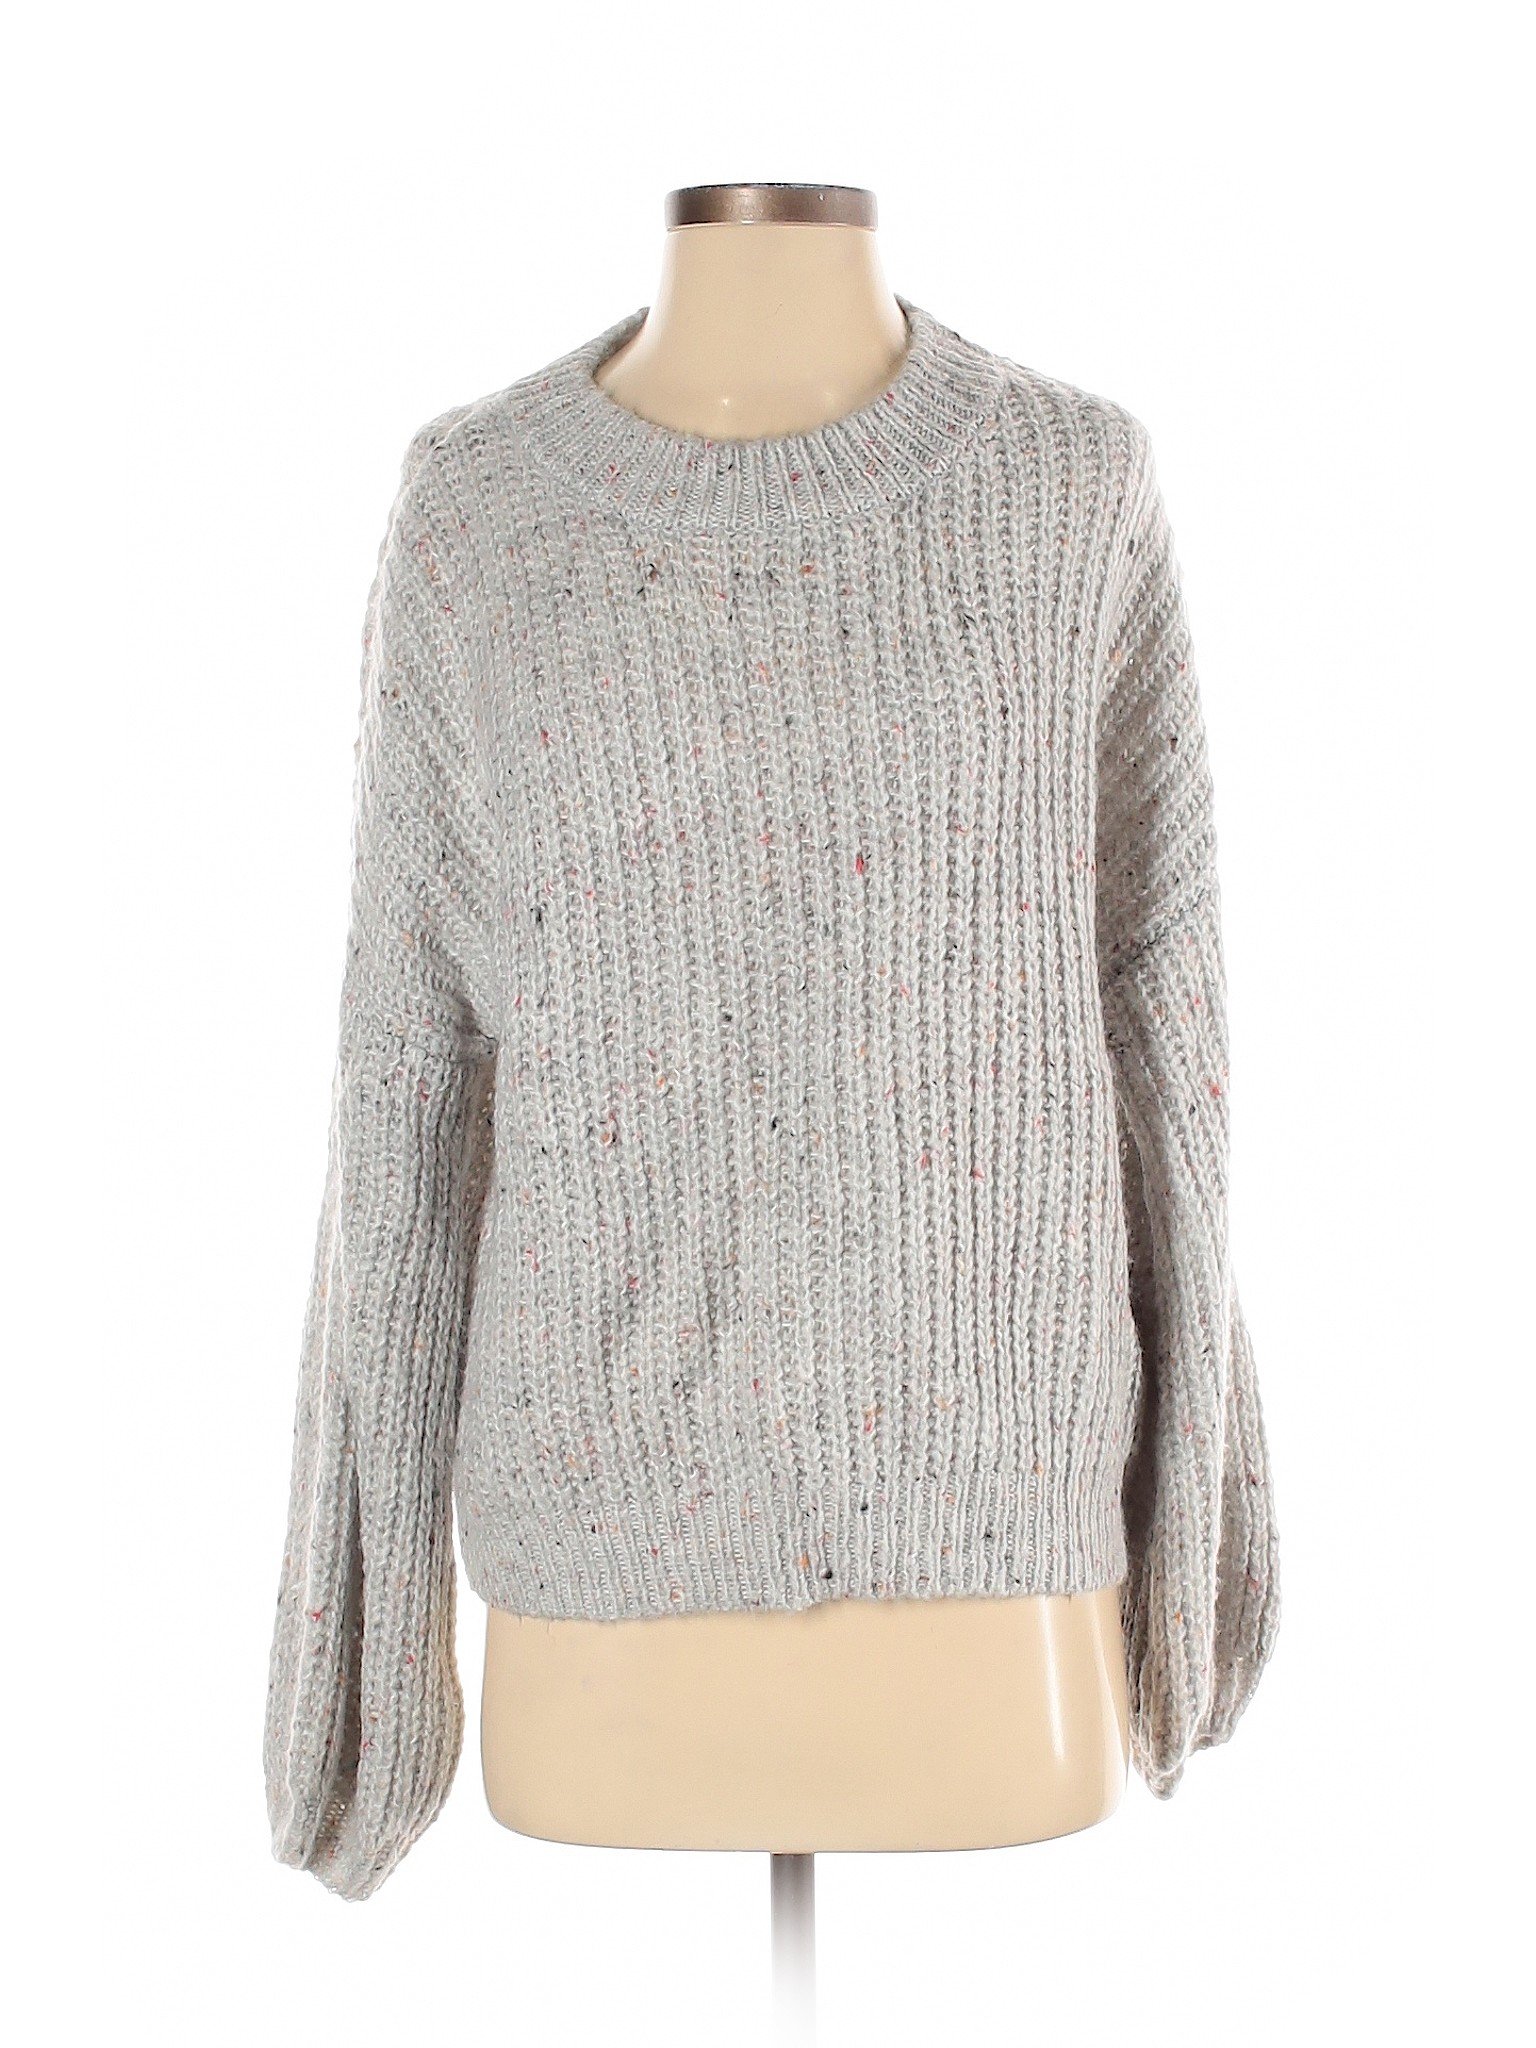 Primark Women Gray Pullover Sweater S | eBay